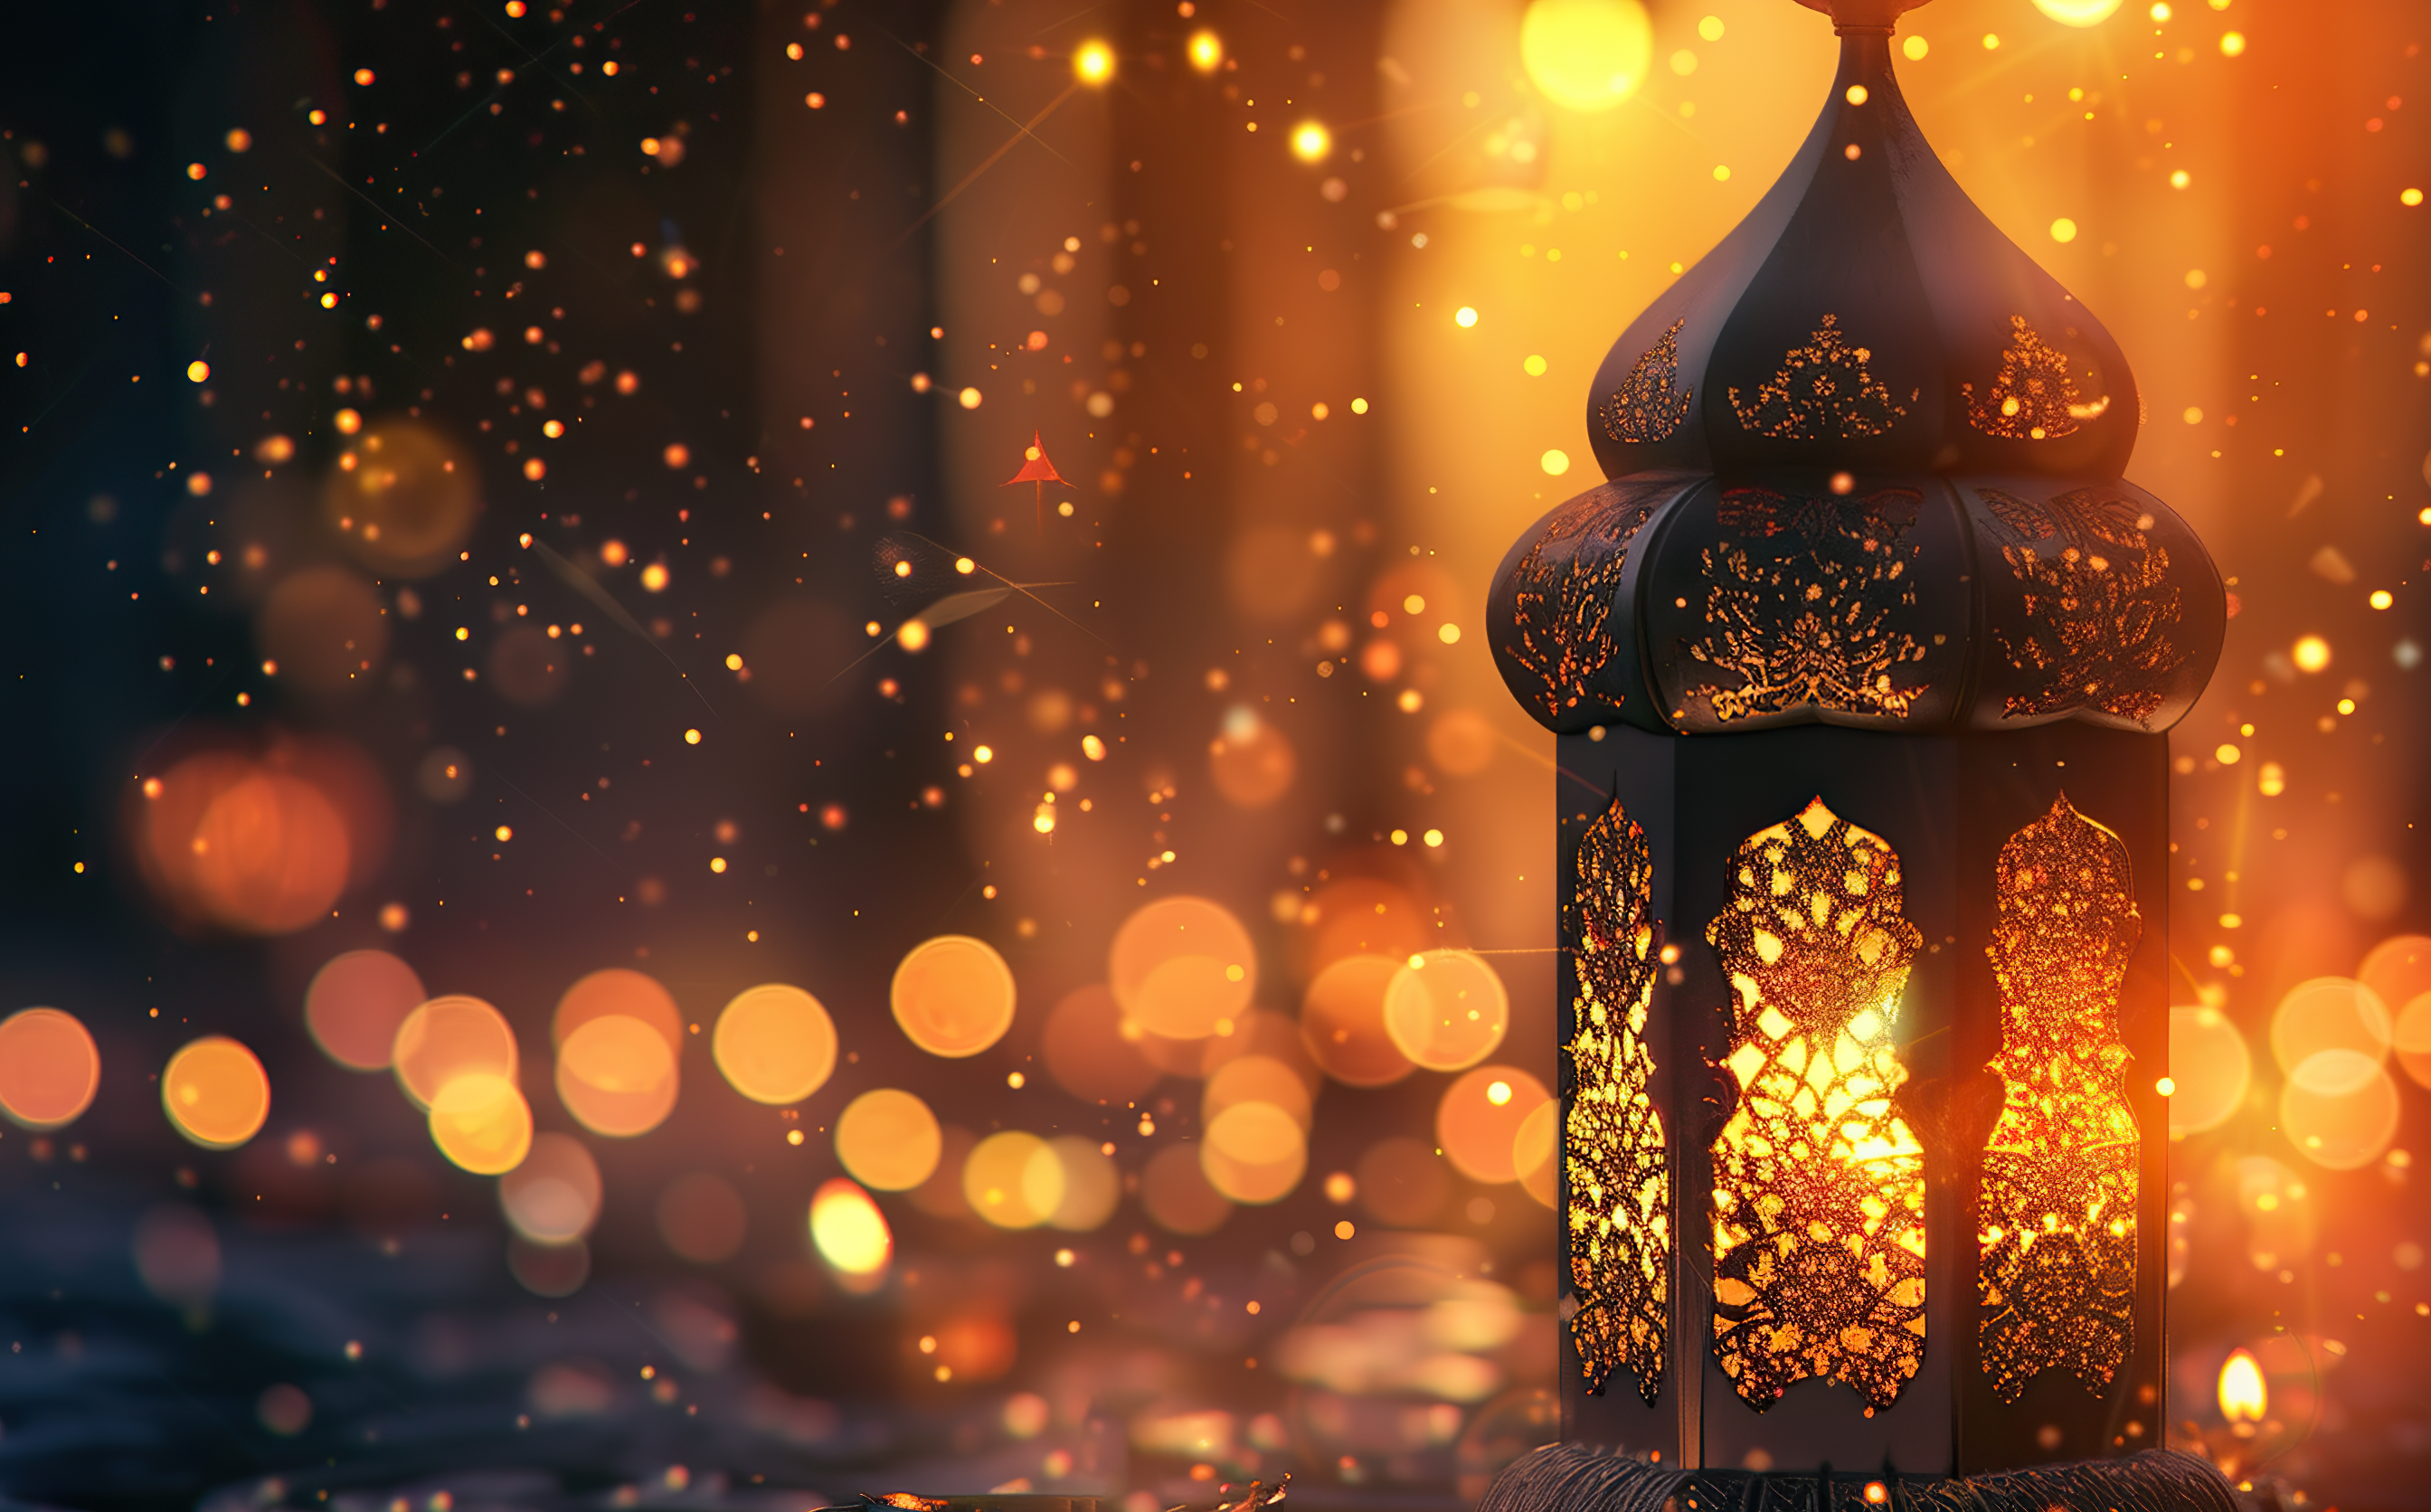 Ramadan kareem background